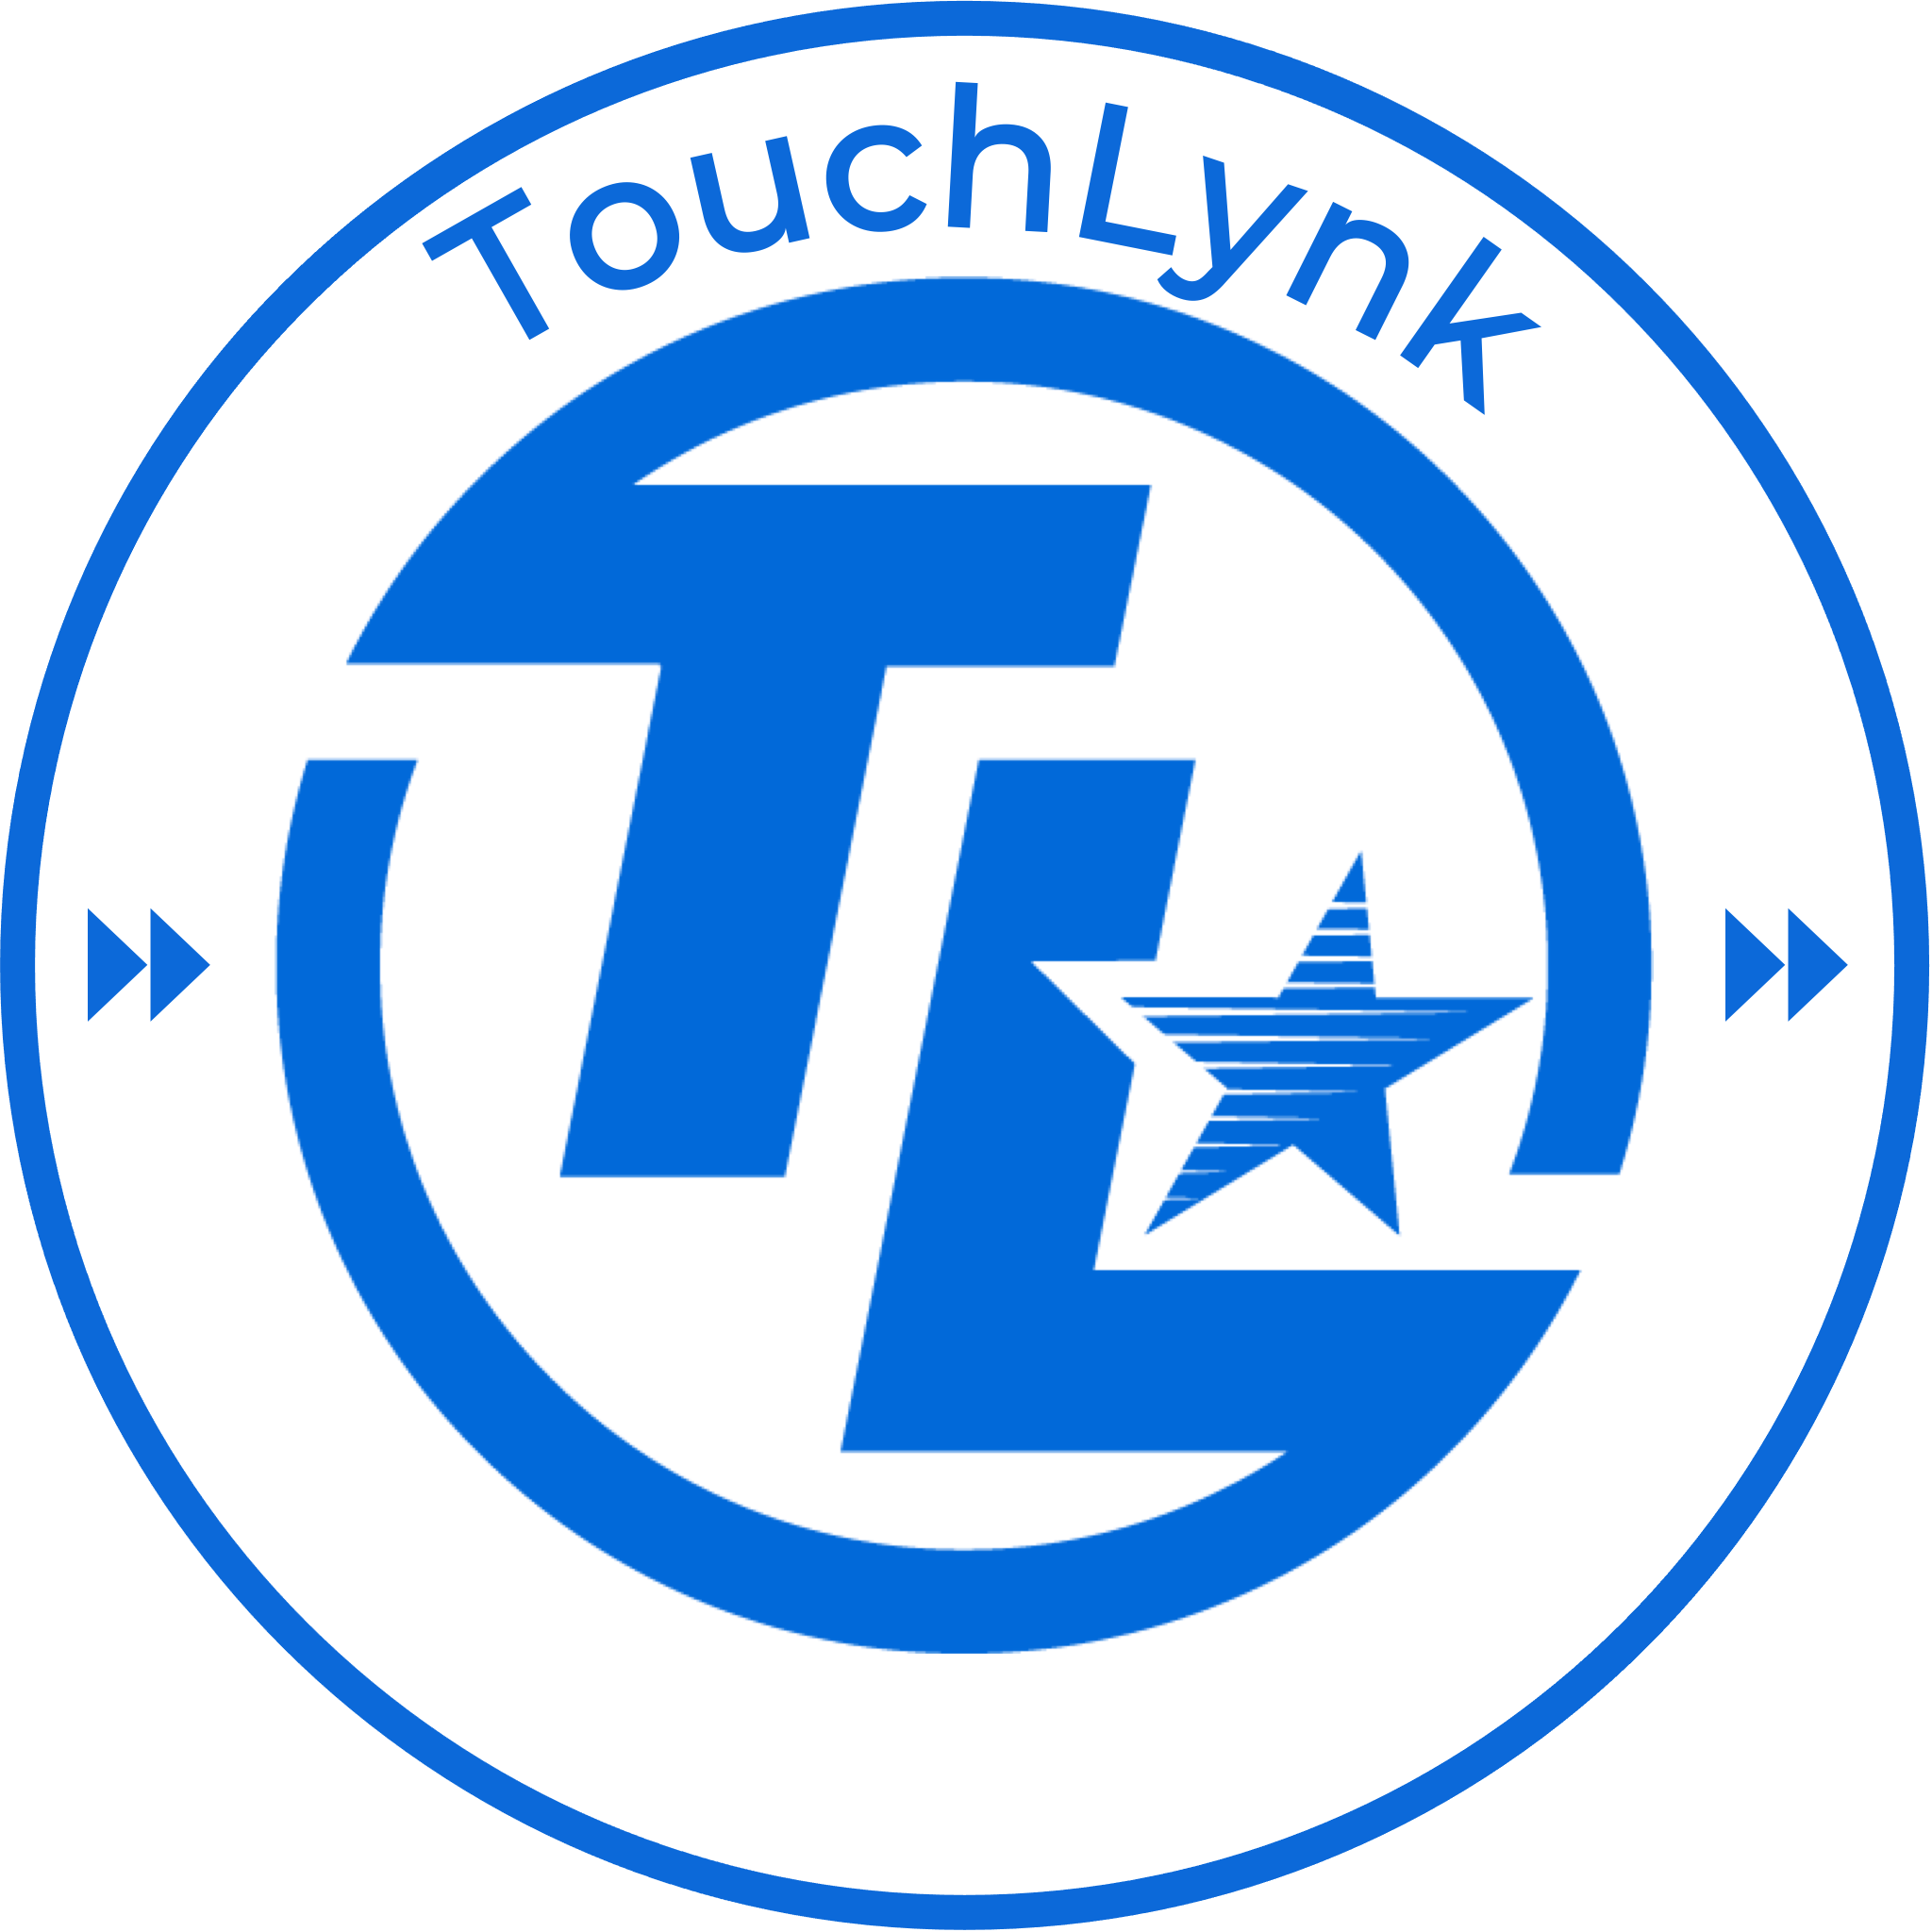 TouchLynk Logo